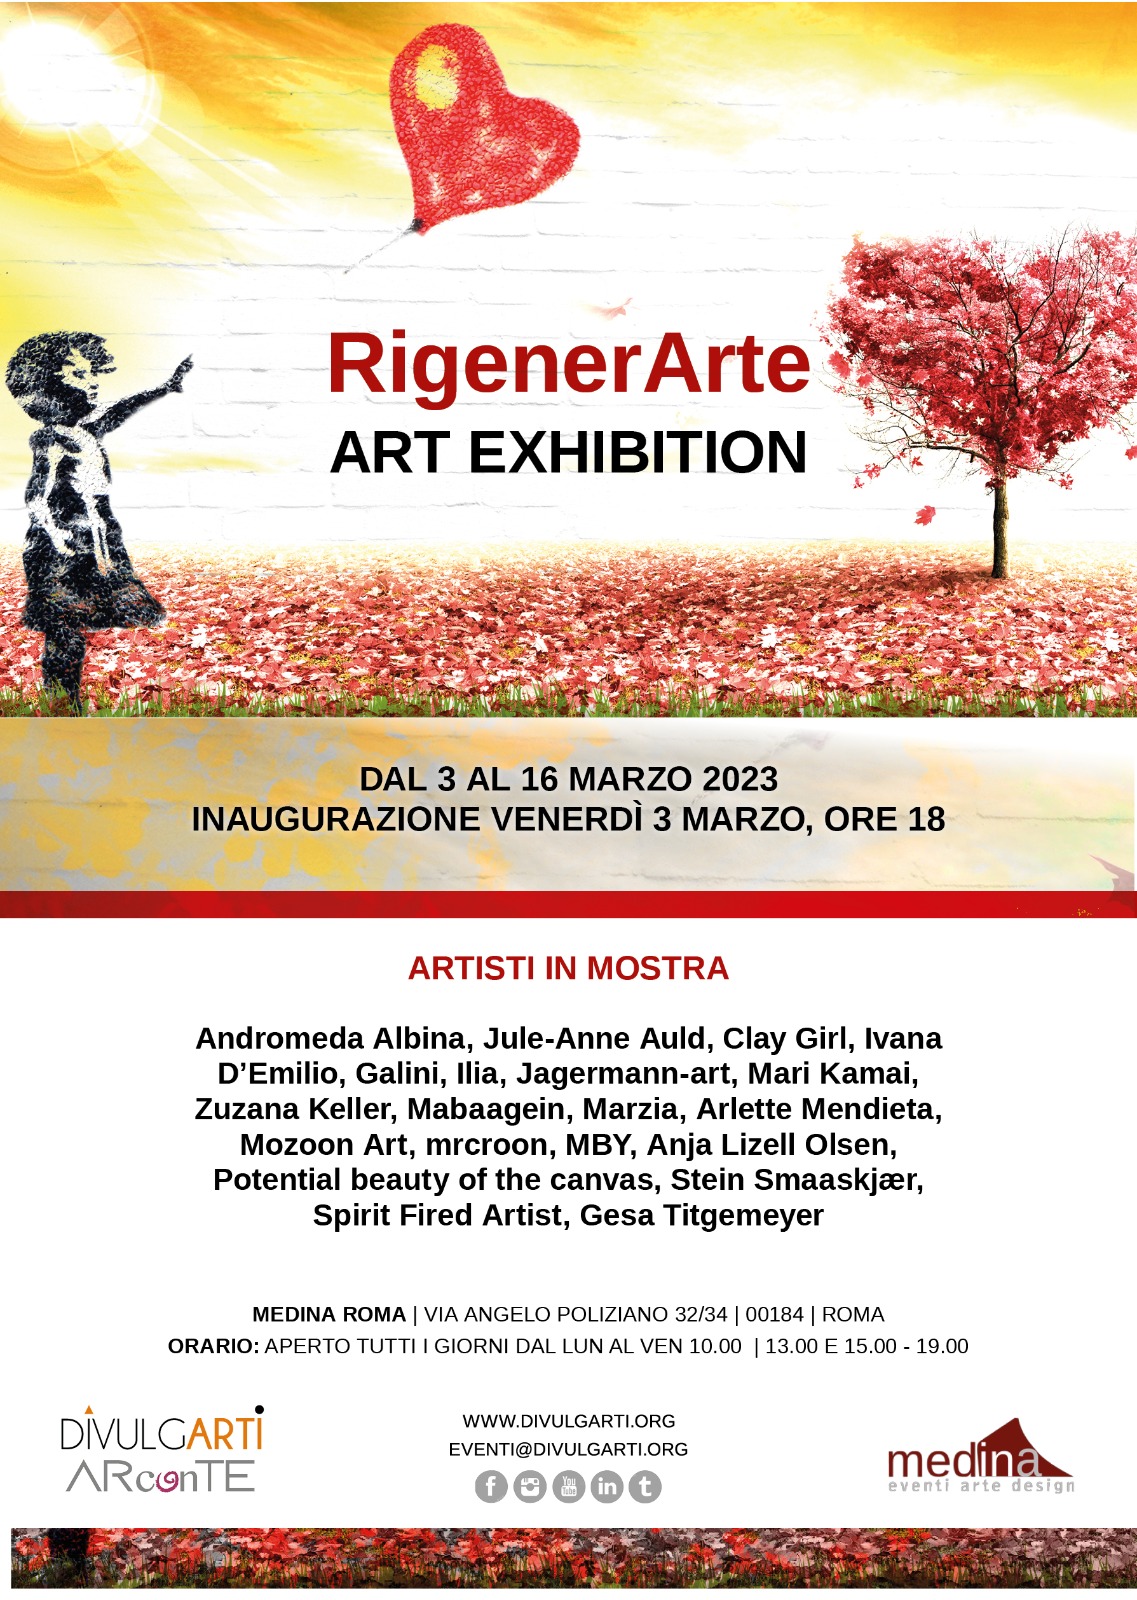 Mostra d'arte contemporanea internazionale RigenerArte#8217;#8217;